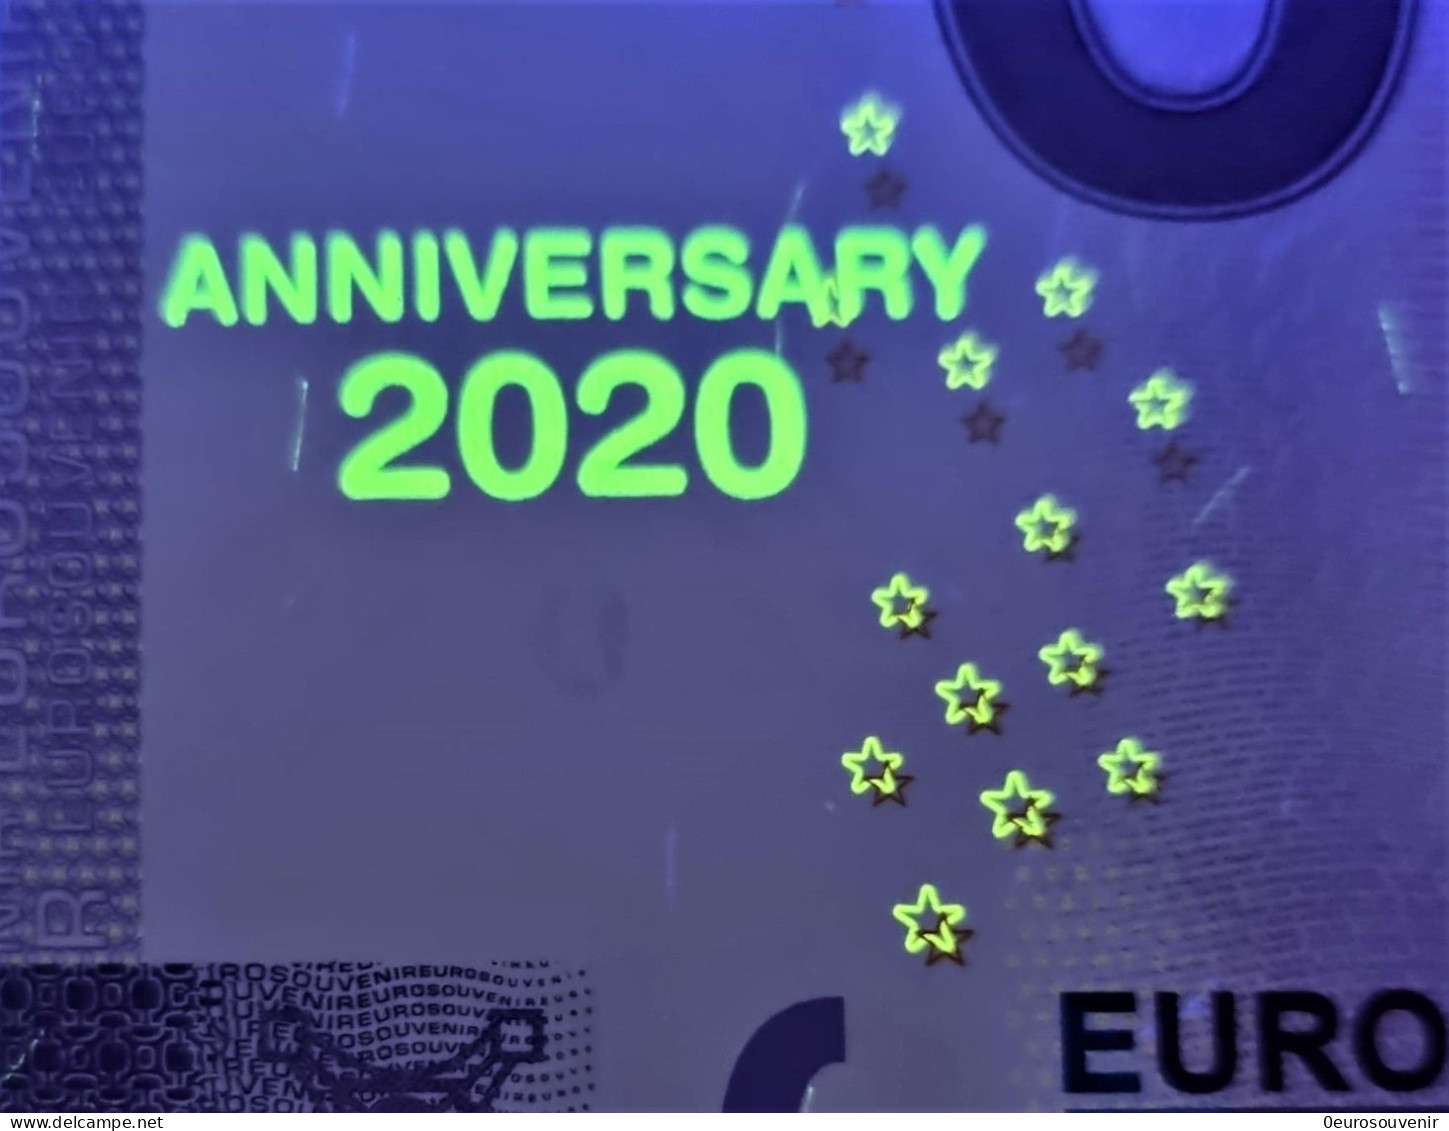 0-Euro XESG 2021-1 DIE WEBEREI - GÜTERSLOH SET NORMAL+ANNIVERSARY - Privatentwürfe